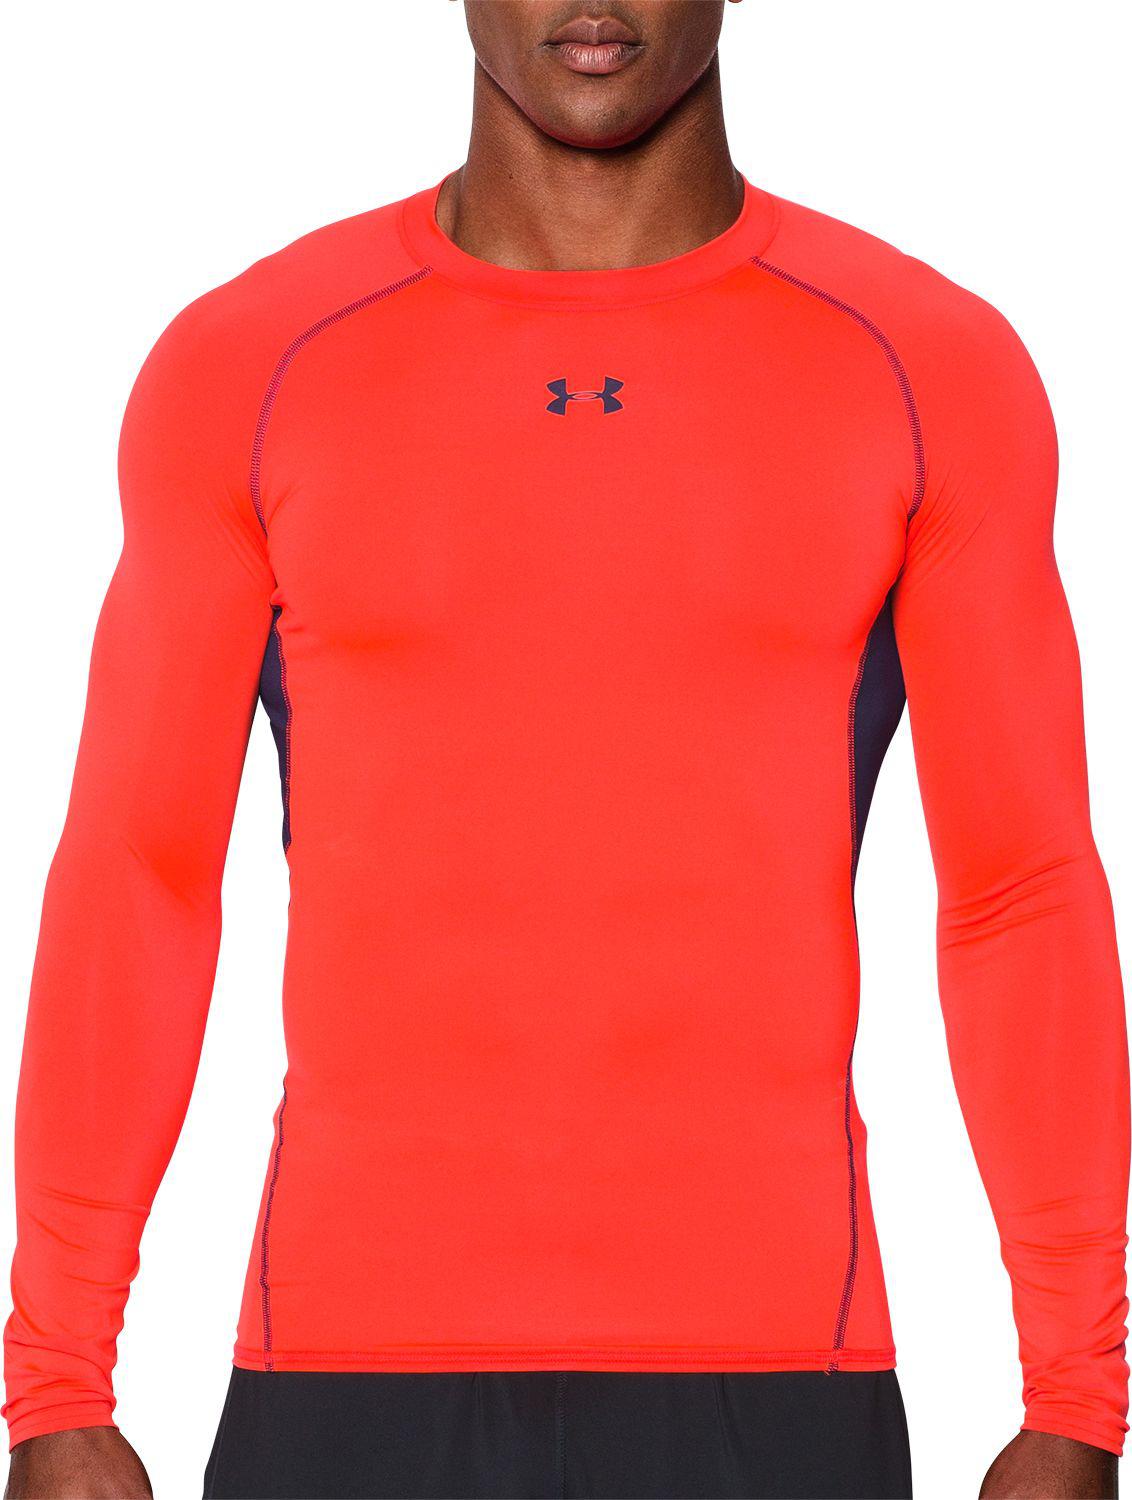 orange under armour long sleeve shirt